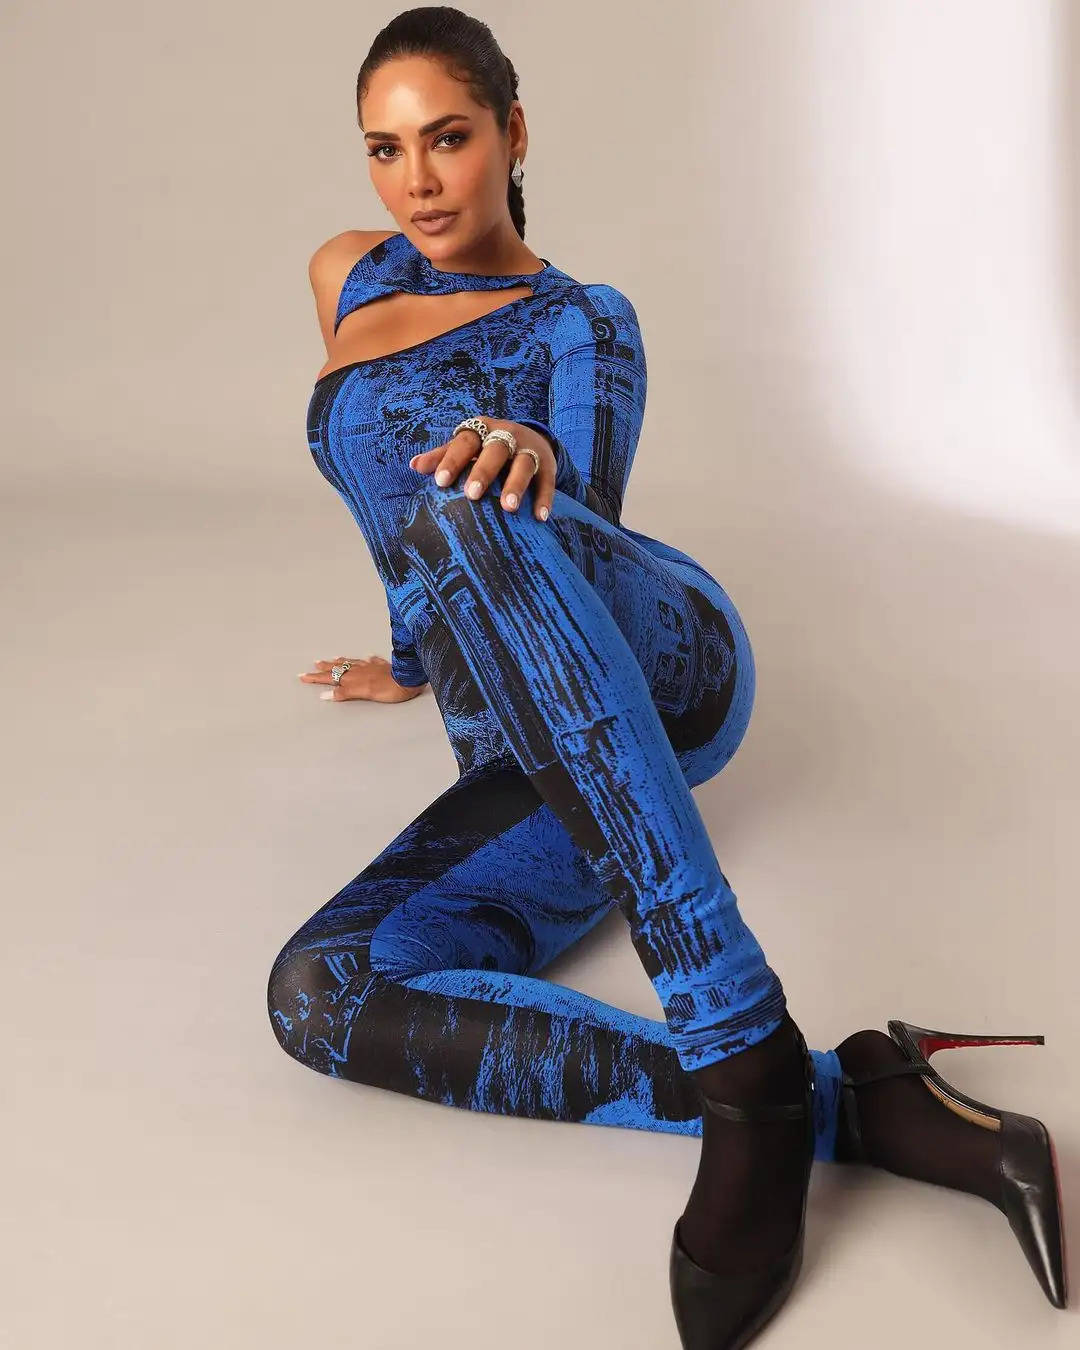 Photos: Esha Gupta Looks Radiant In Blue Off-shoulder Dress, See Her Hot Looks